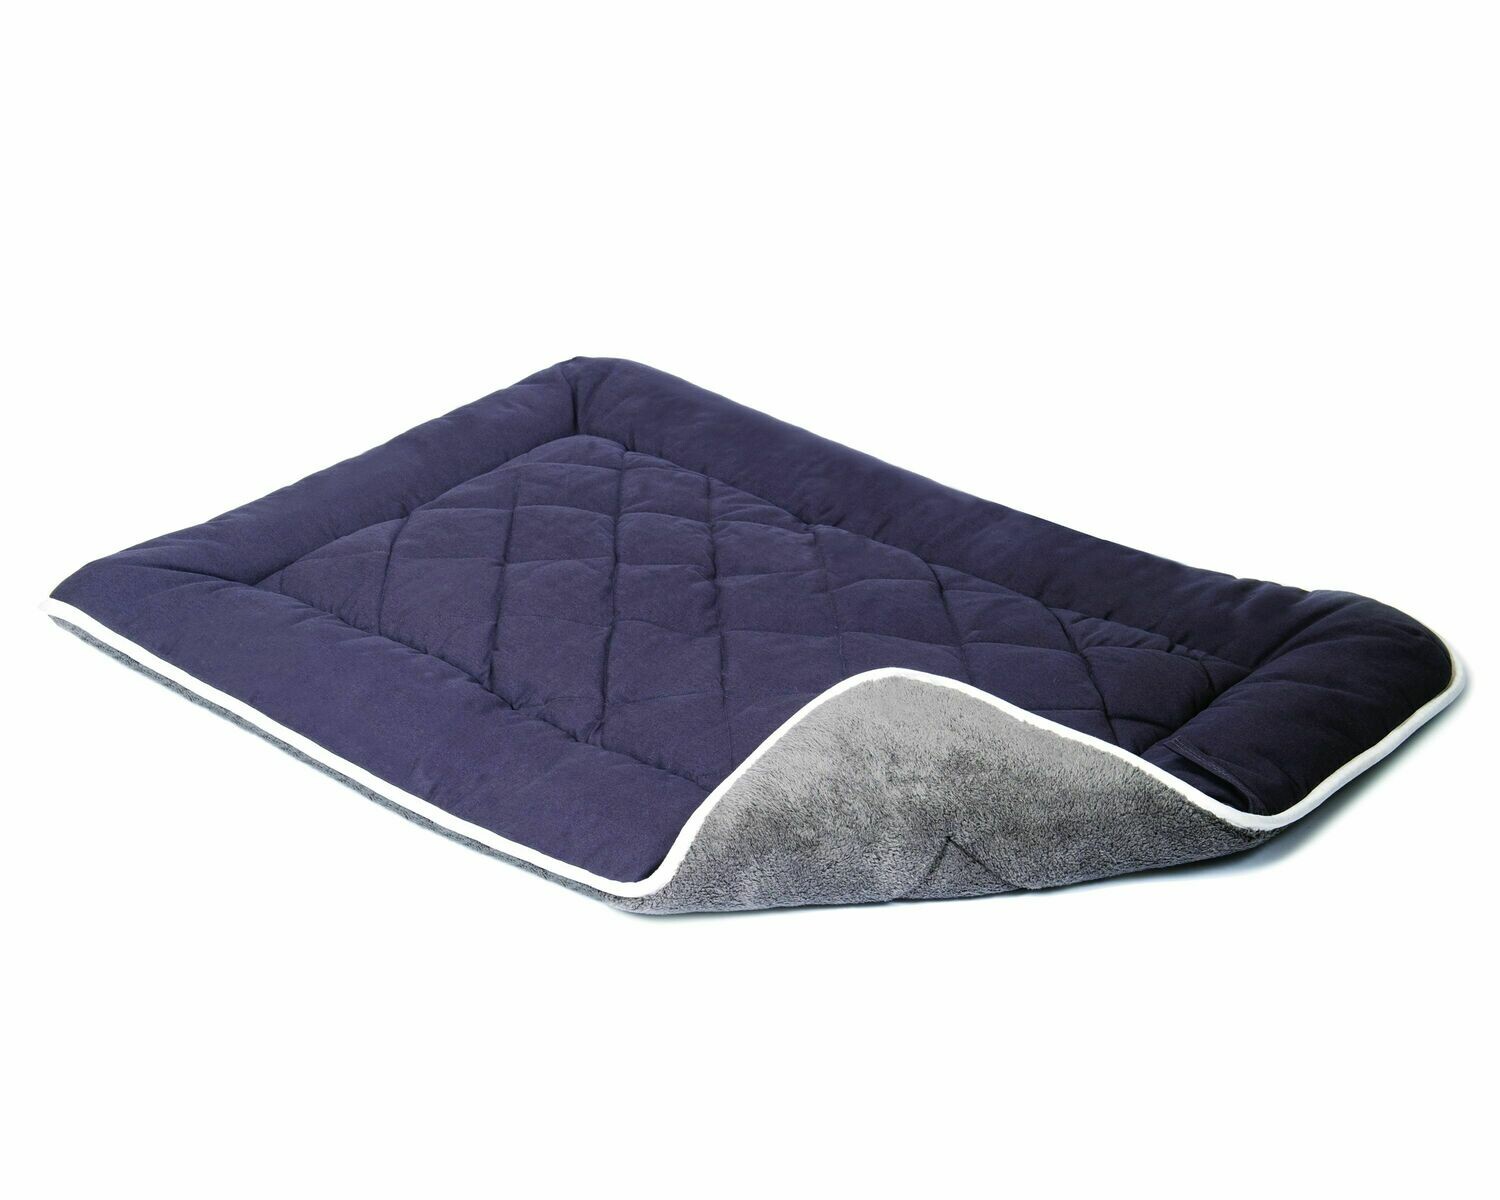 DGS Sleeper Cushion - Pebble Grey. (30"inch)